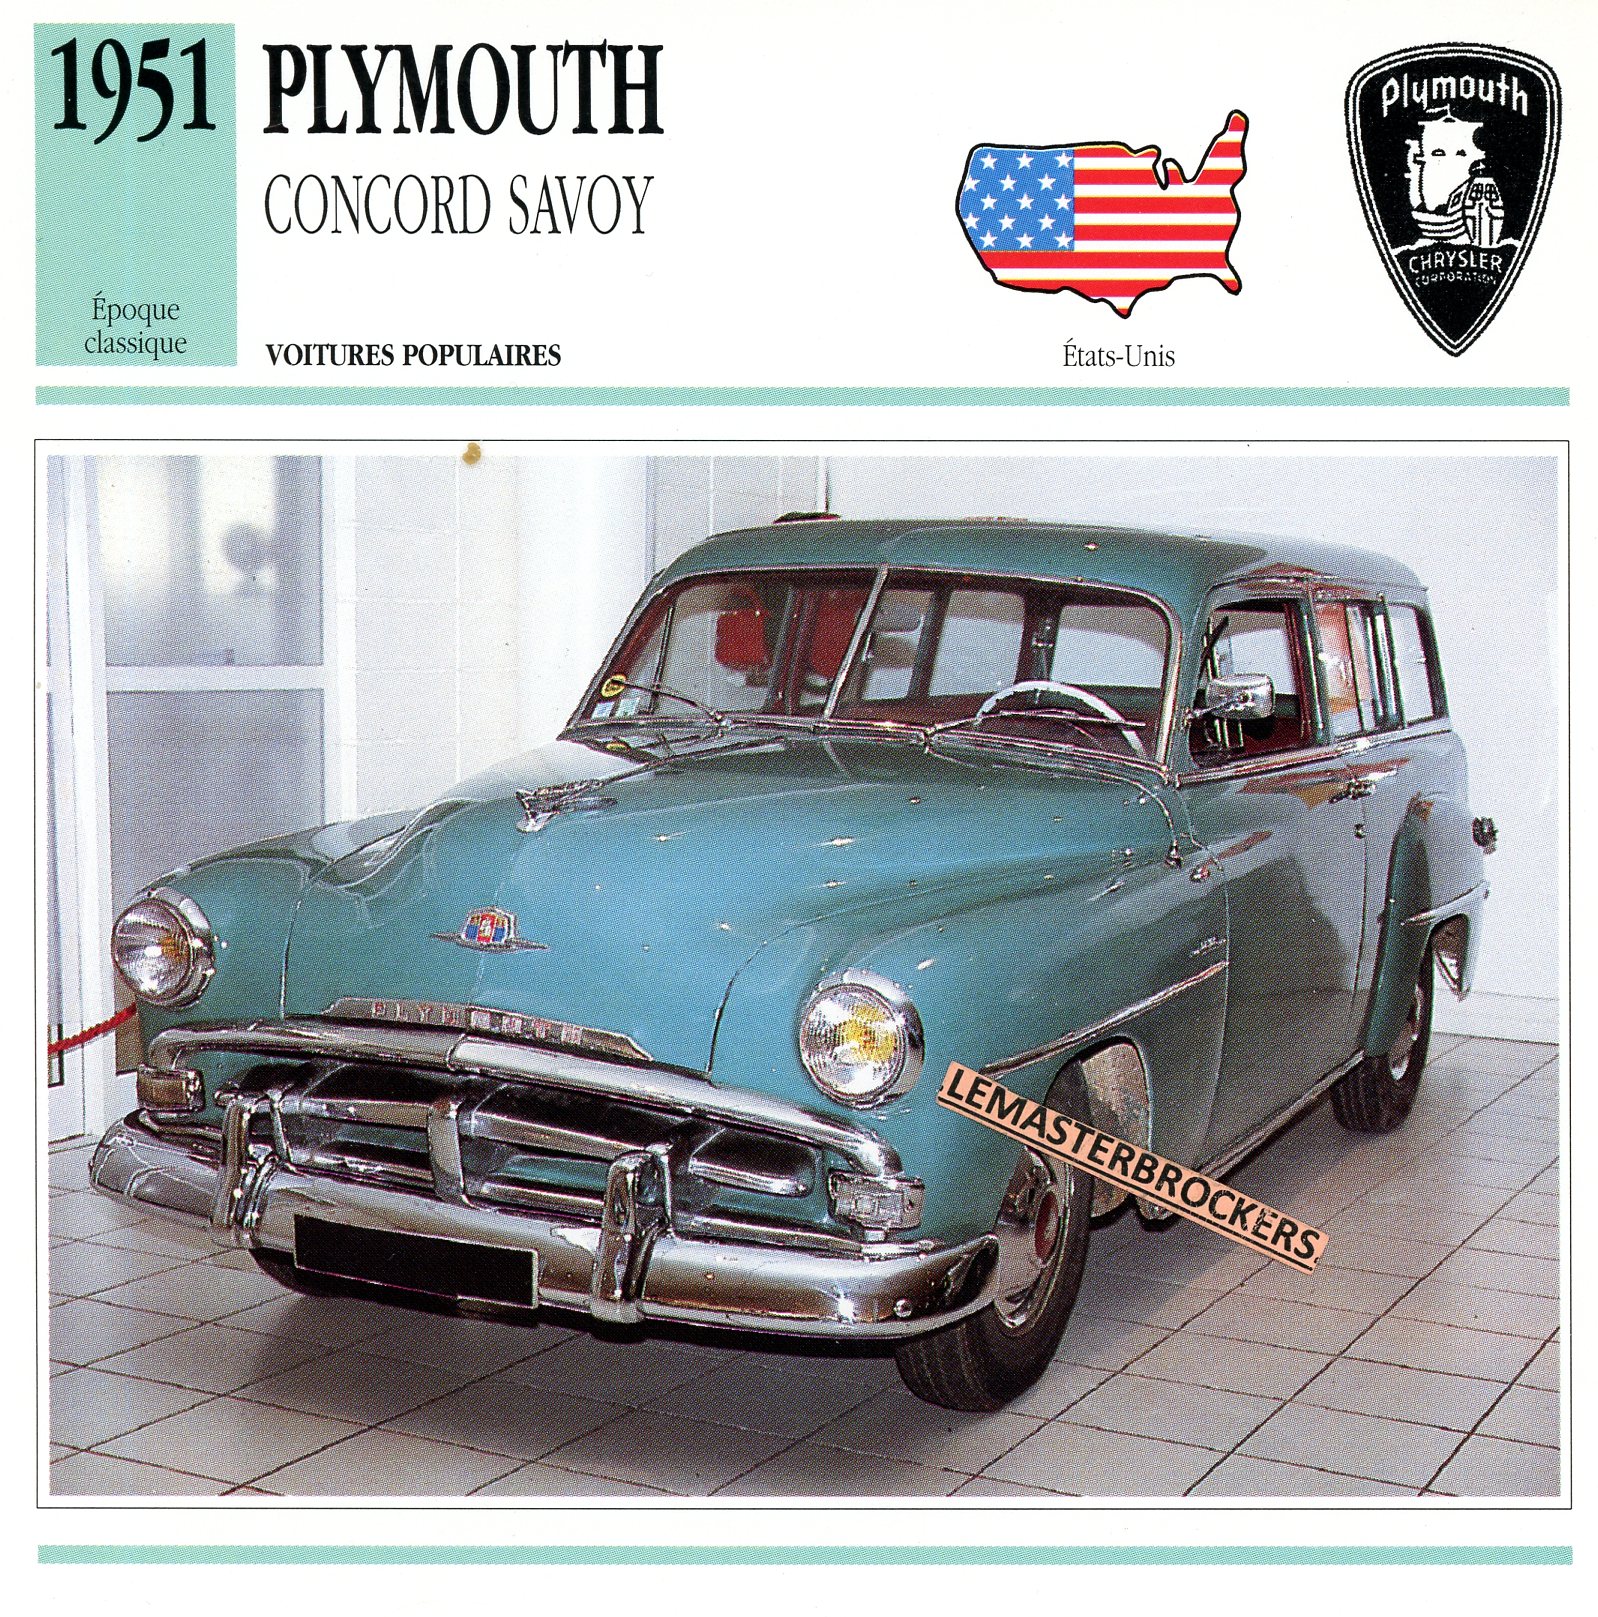 PLYMOUTH-CONCORD-SAVOY-1951-FICHE-AUTO-LEMASTERBROCKERS-ATLAS-ÉDITION